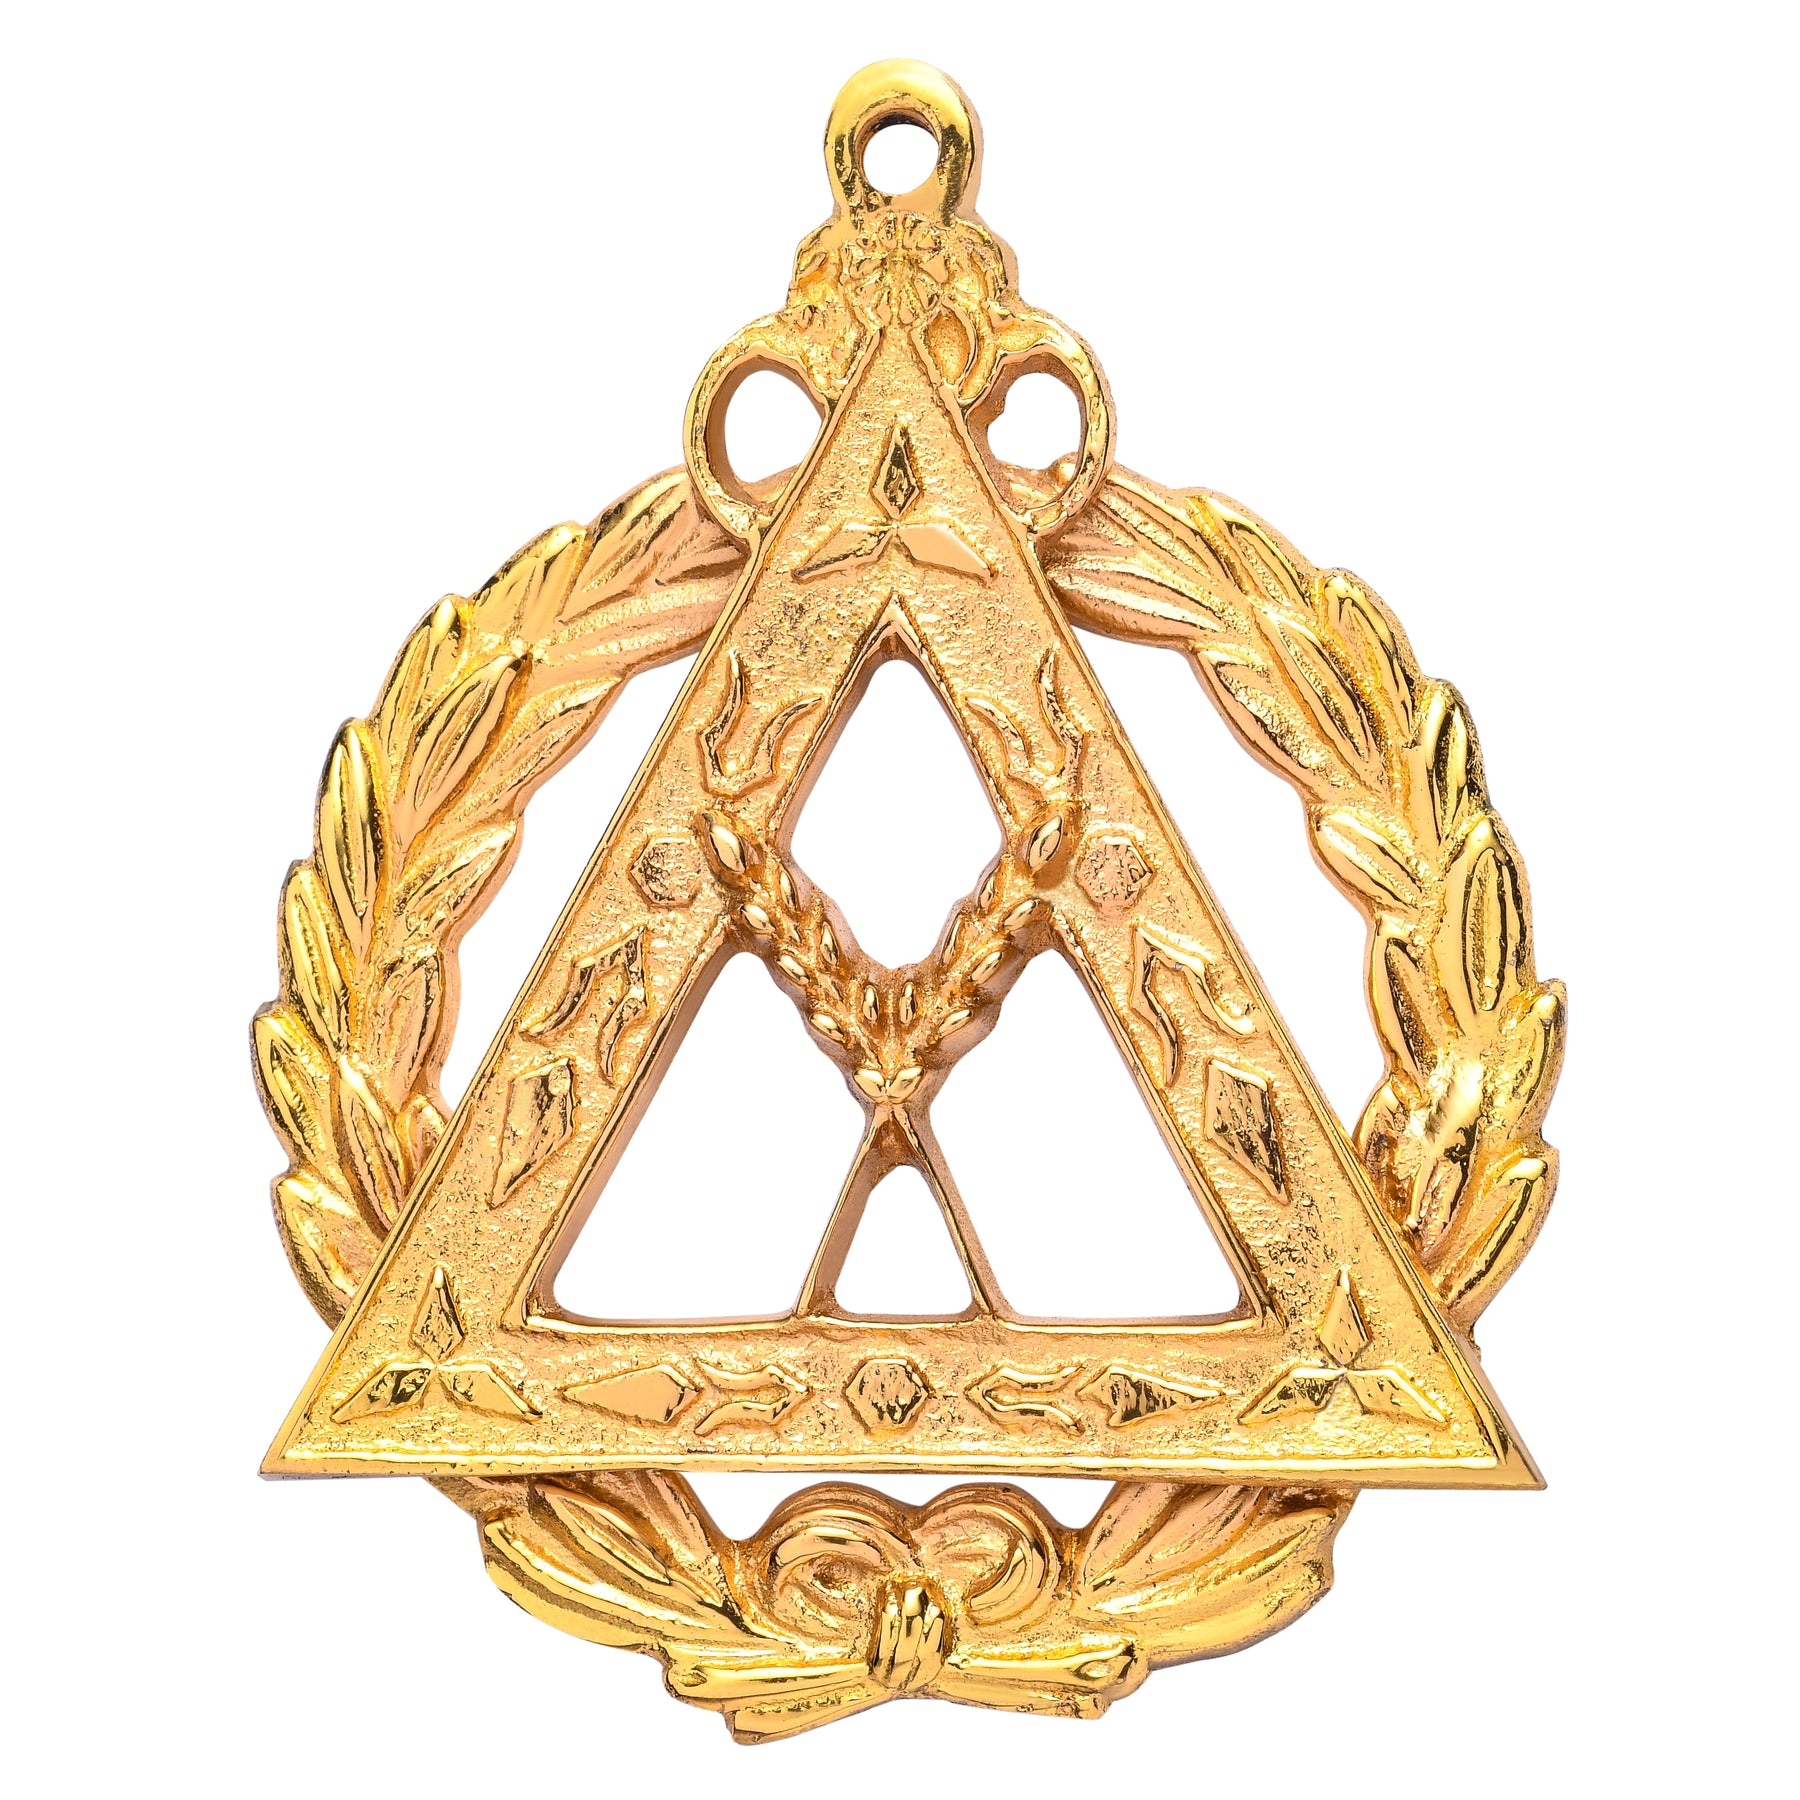 Grand Secretary Royal Arch Chapter Officer Collar Jewel - Gold Plated - Bricks Masons